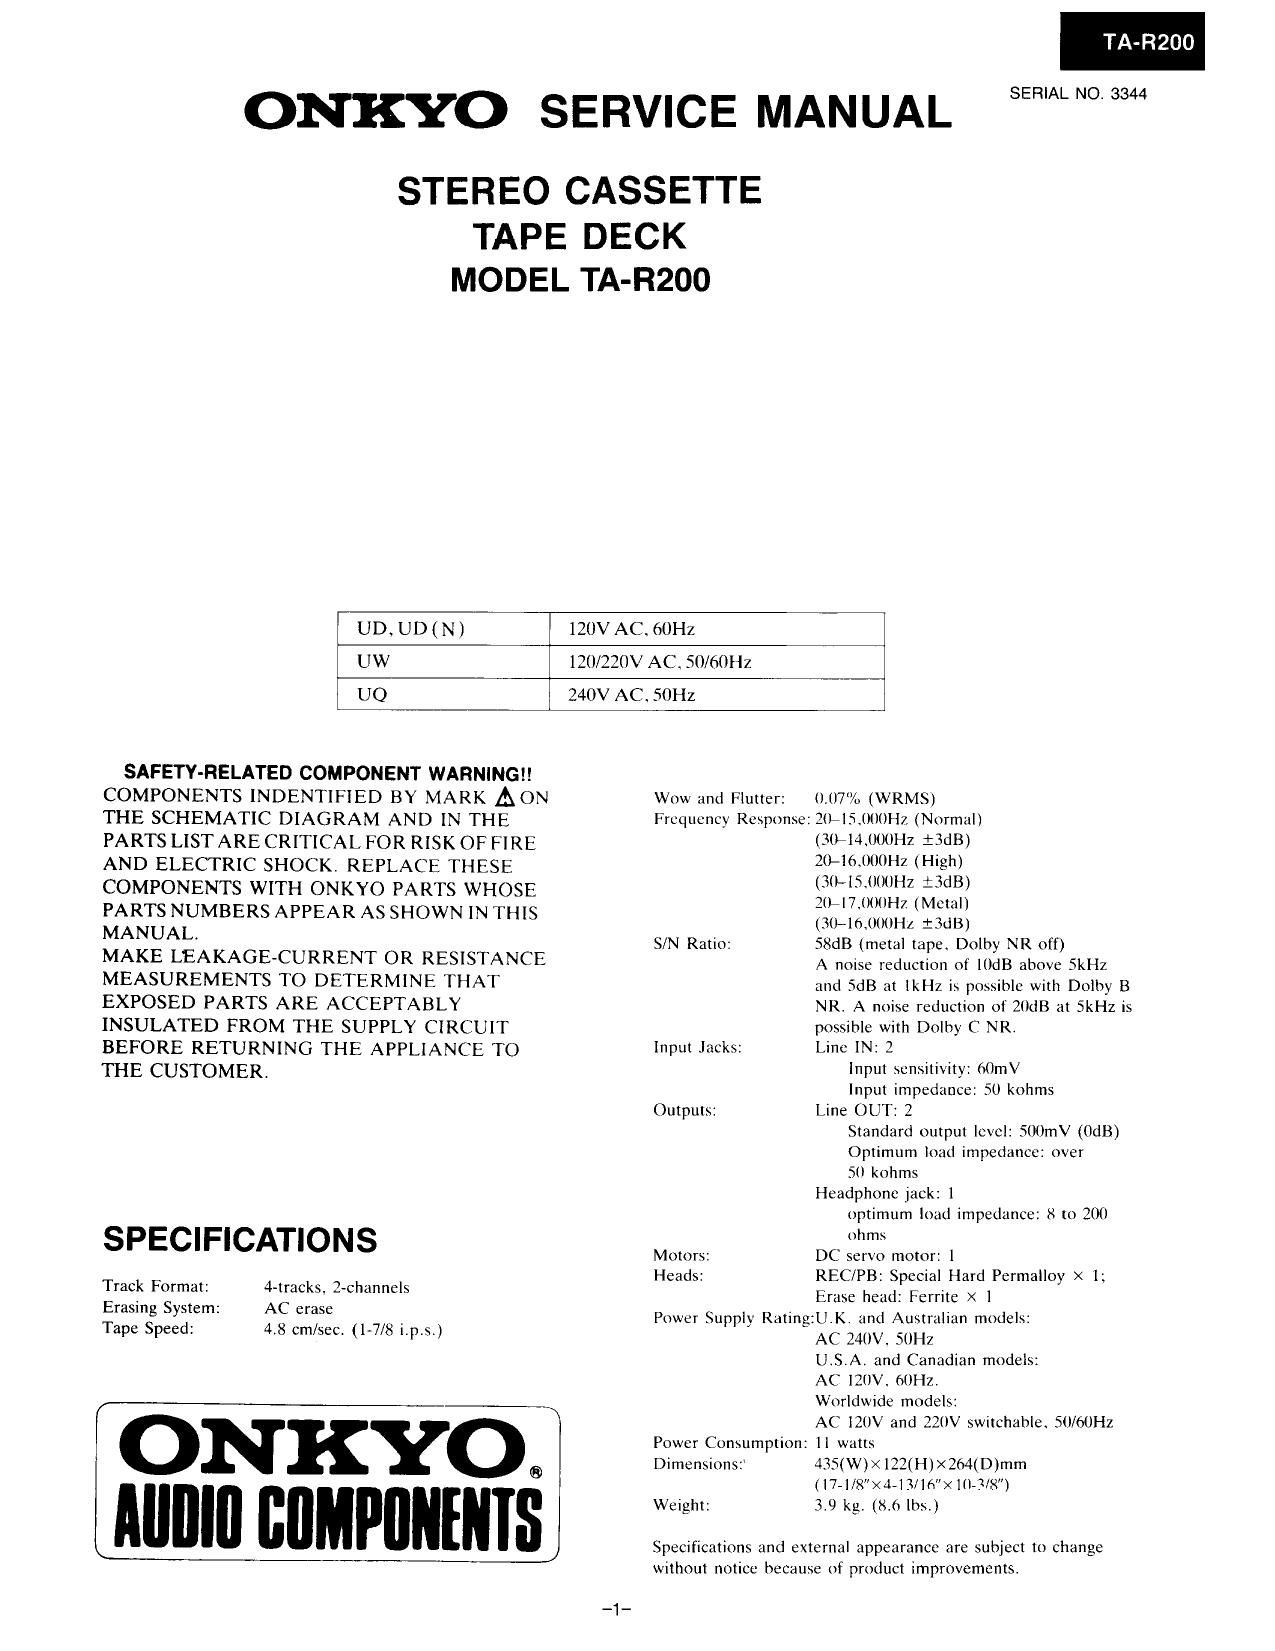 Onkyo TAR 200 Service Manual